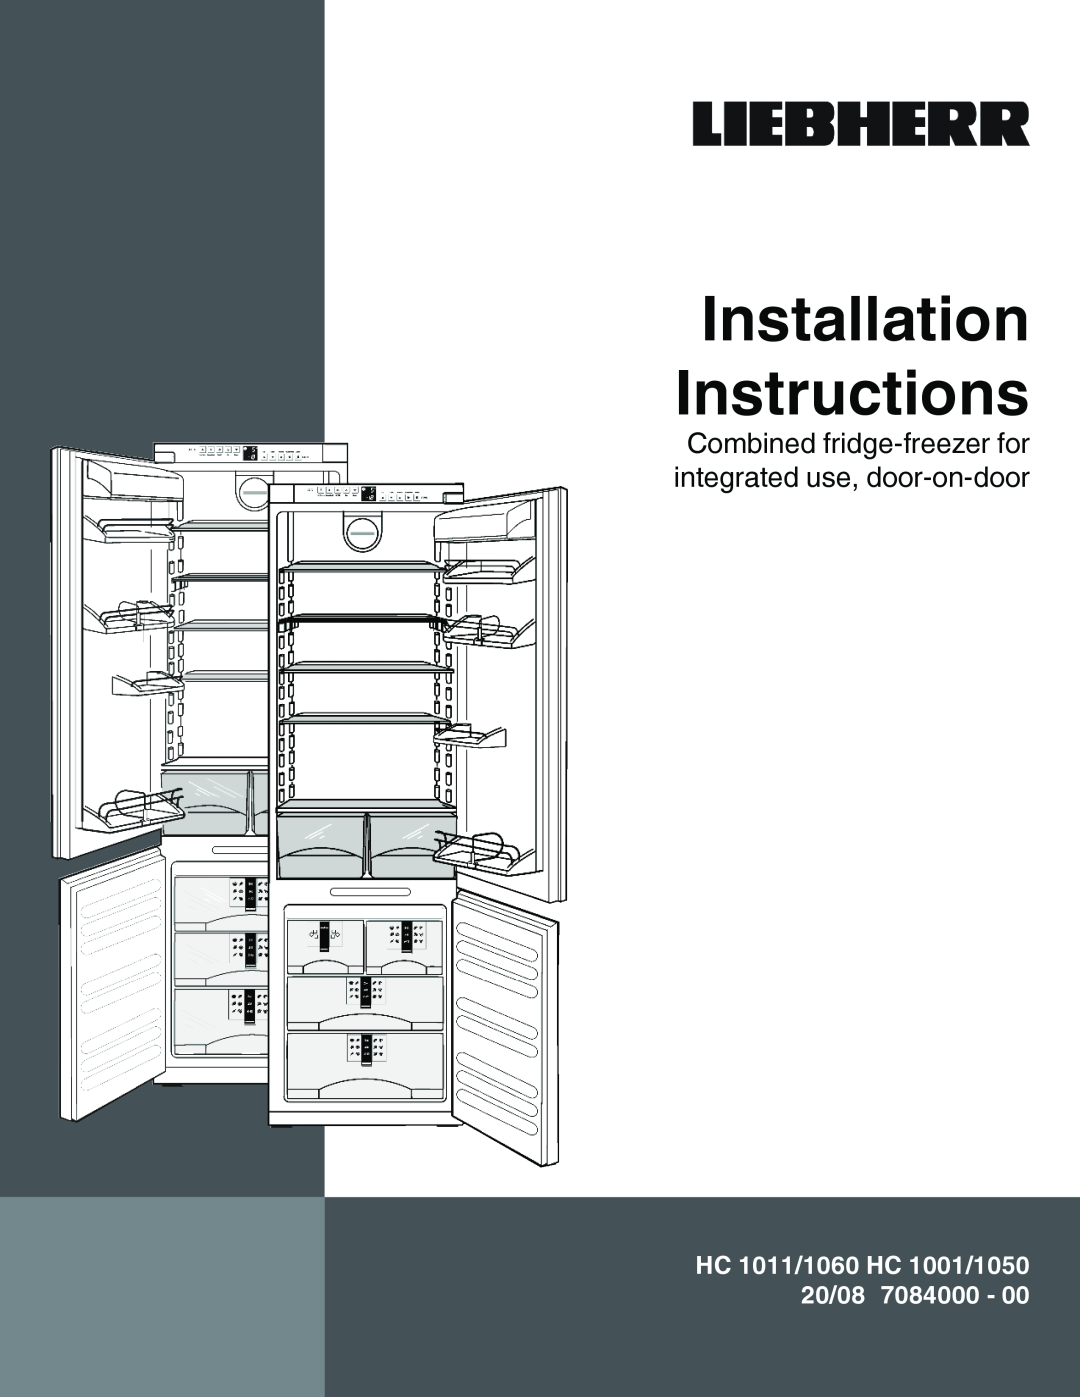 Liebherr HC1060, HC1011 installation instructions Installation Instructions, HC 1011/1060 HC 1001/1050 20/08 